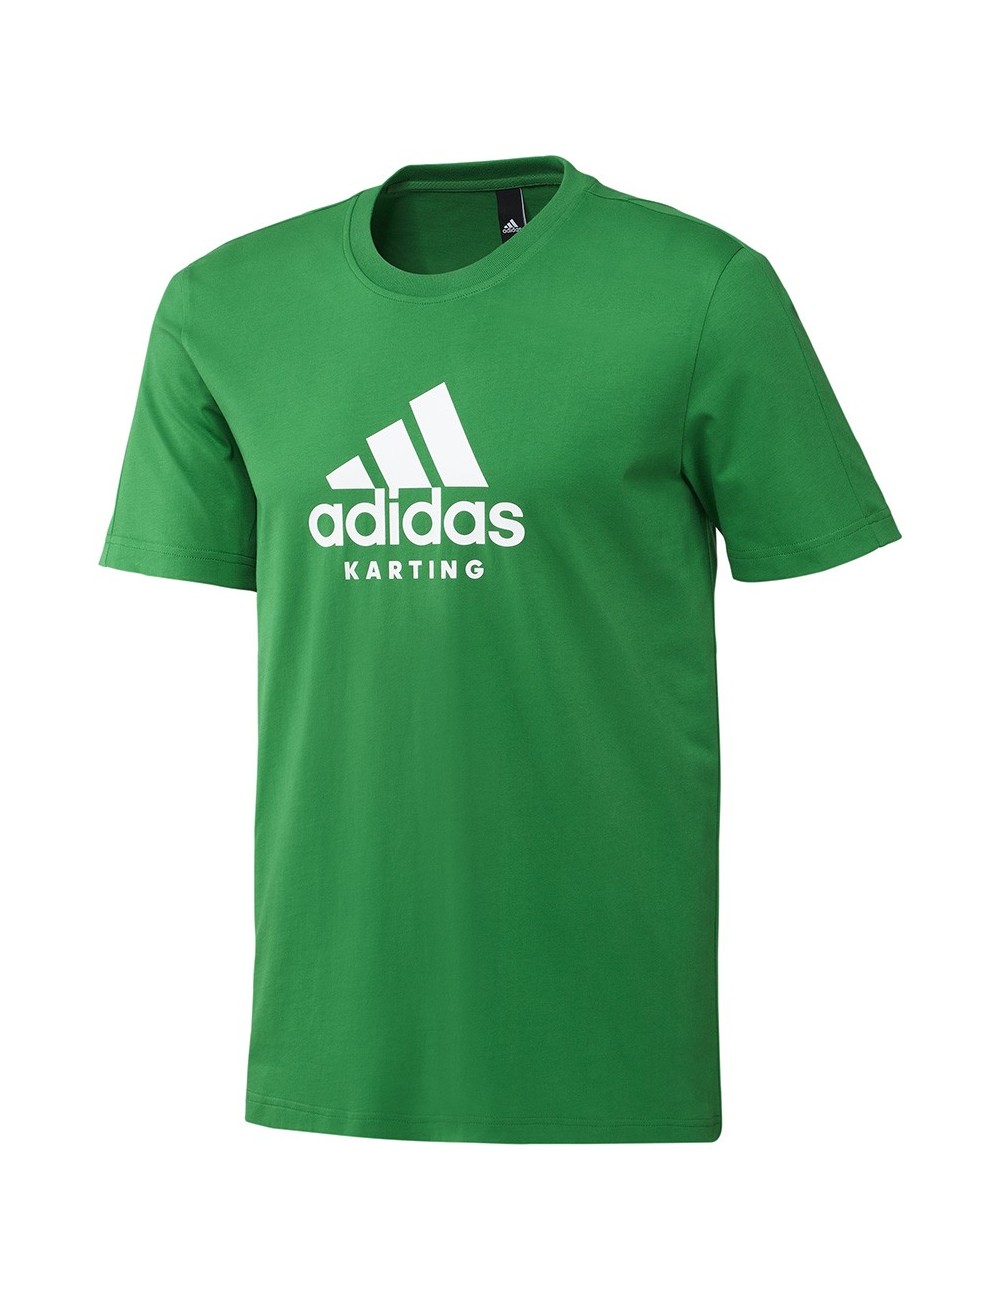 Adidas T-Shirt Kart grün